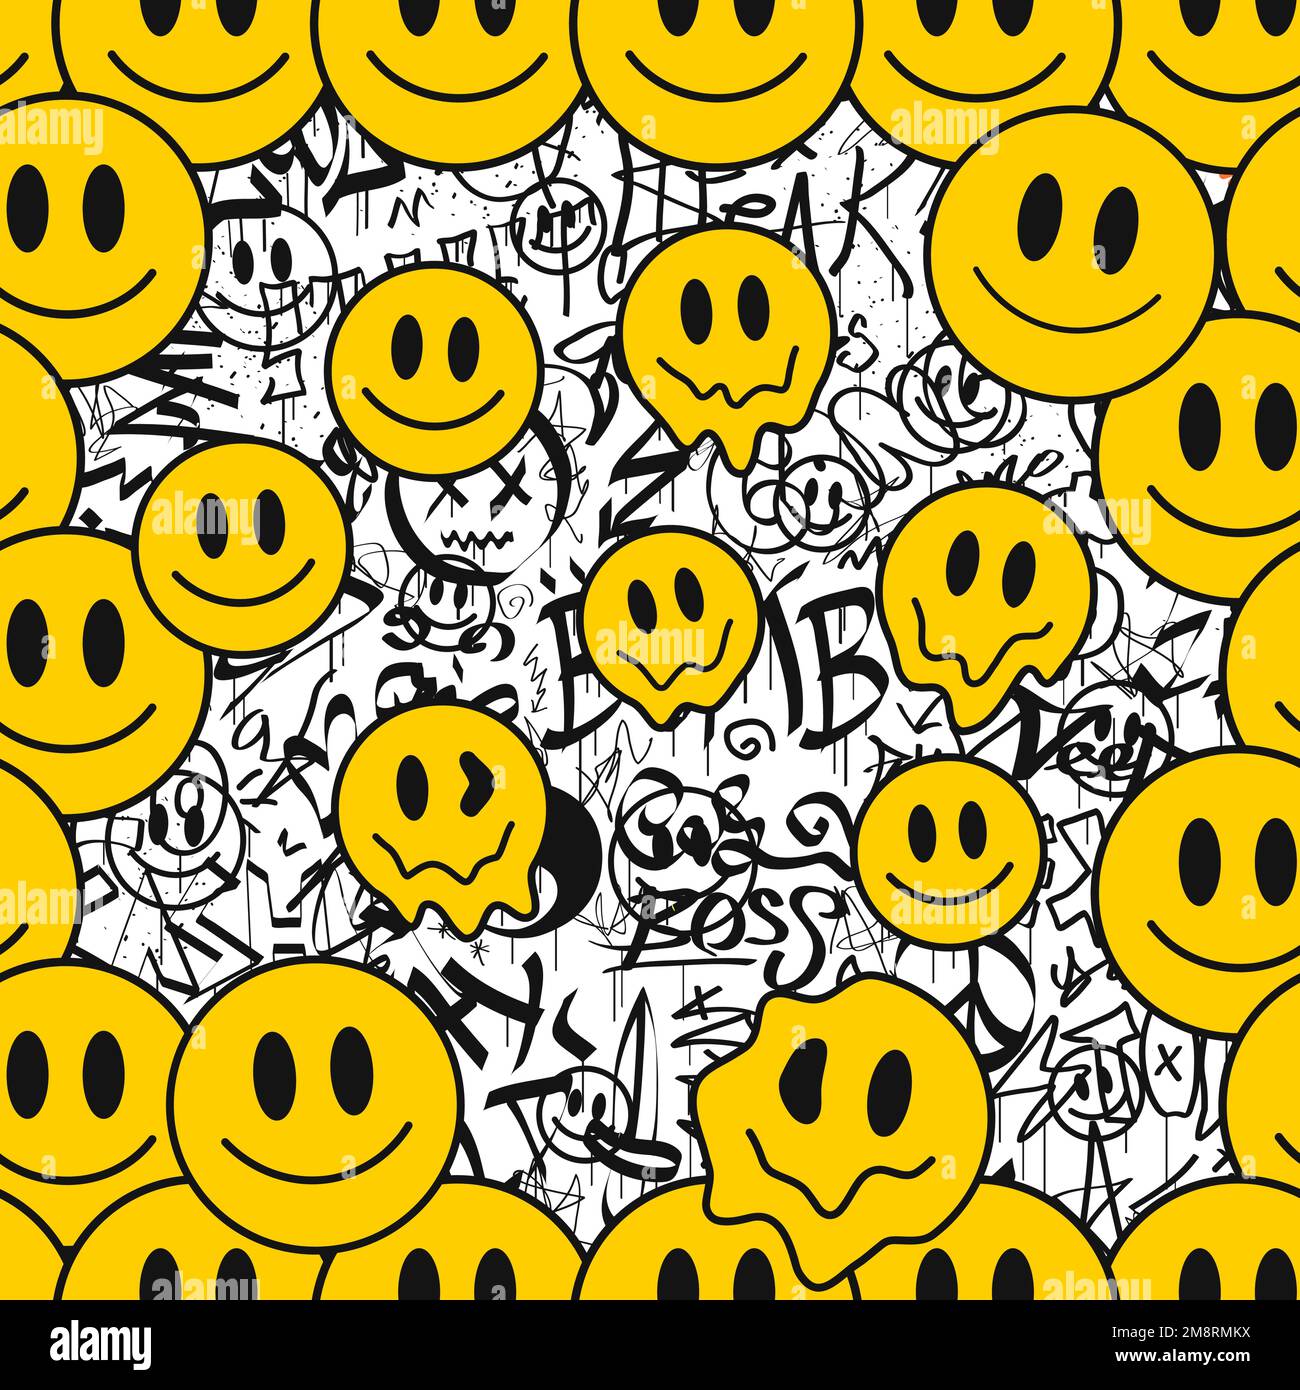 Trippy Smiley Face Wallpaper Stock Illustrations  152 Trippy Smiley Face  Wallpaper Stock Illustrations Vectors  Clipart  Dreamstime